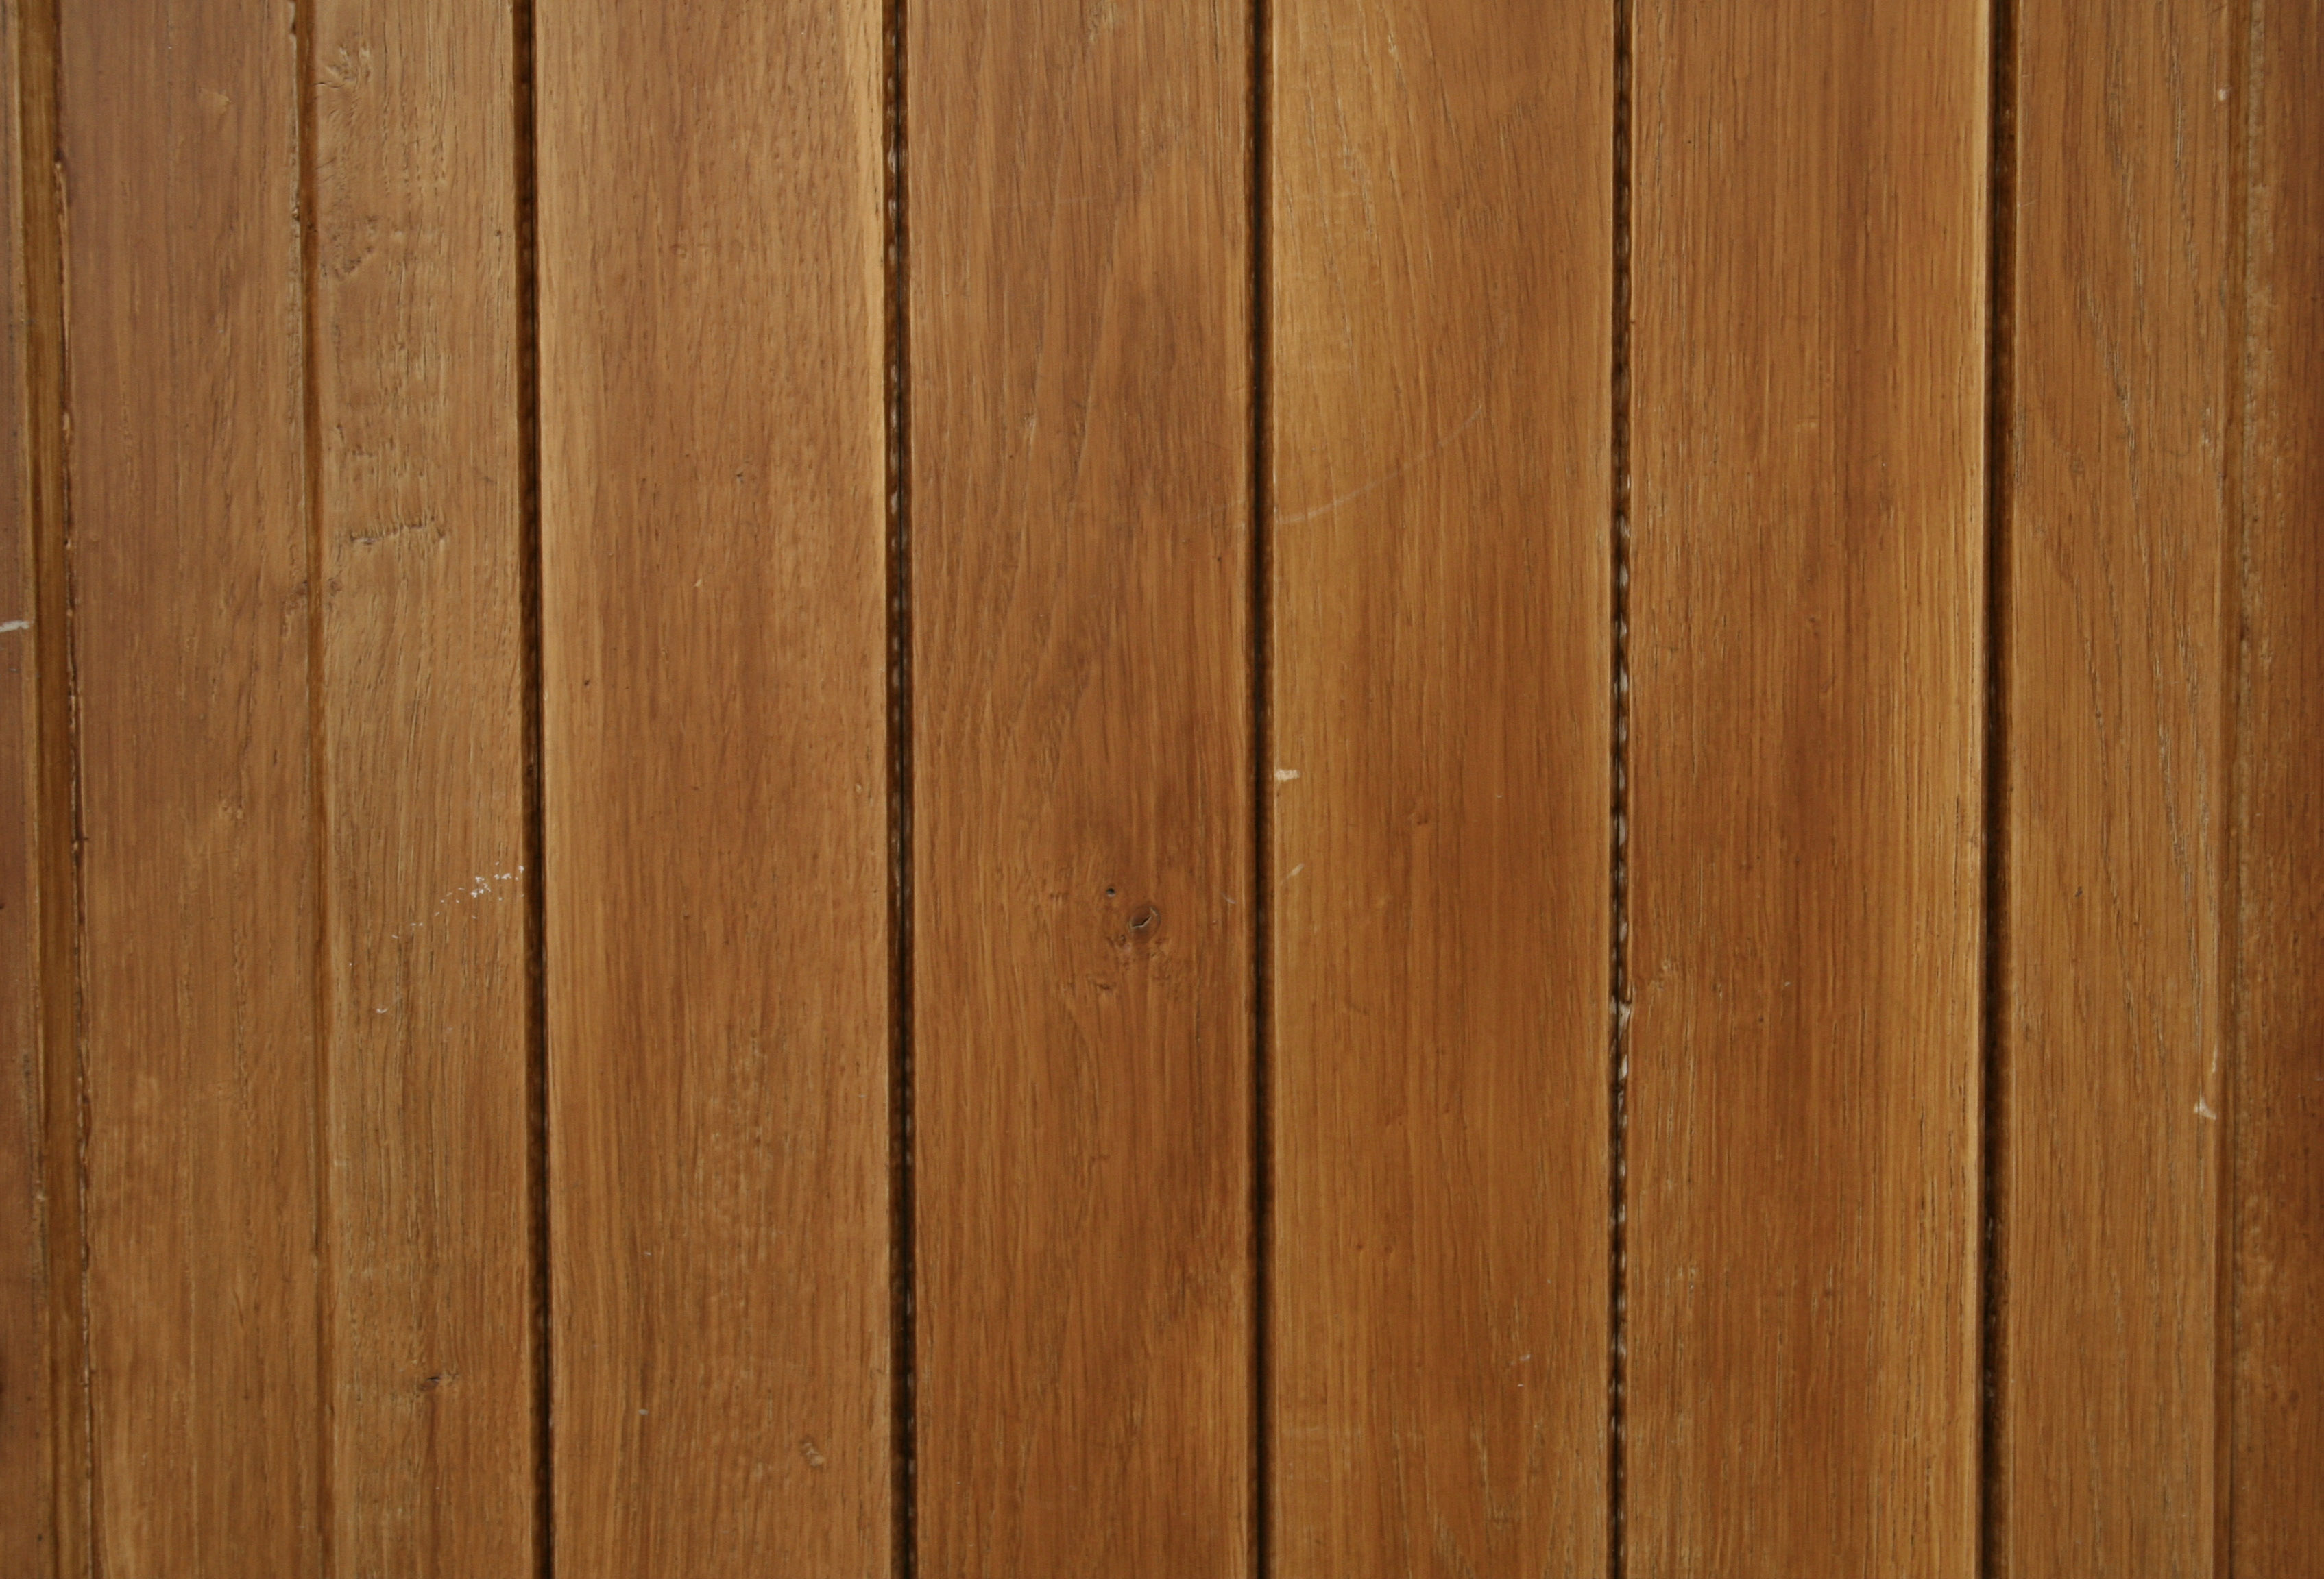 Wood panel texture photo